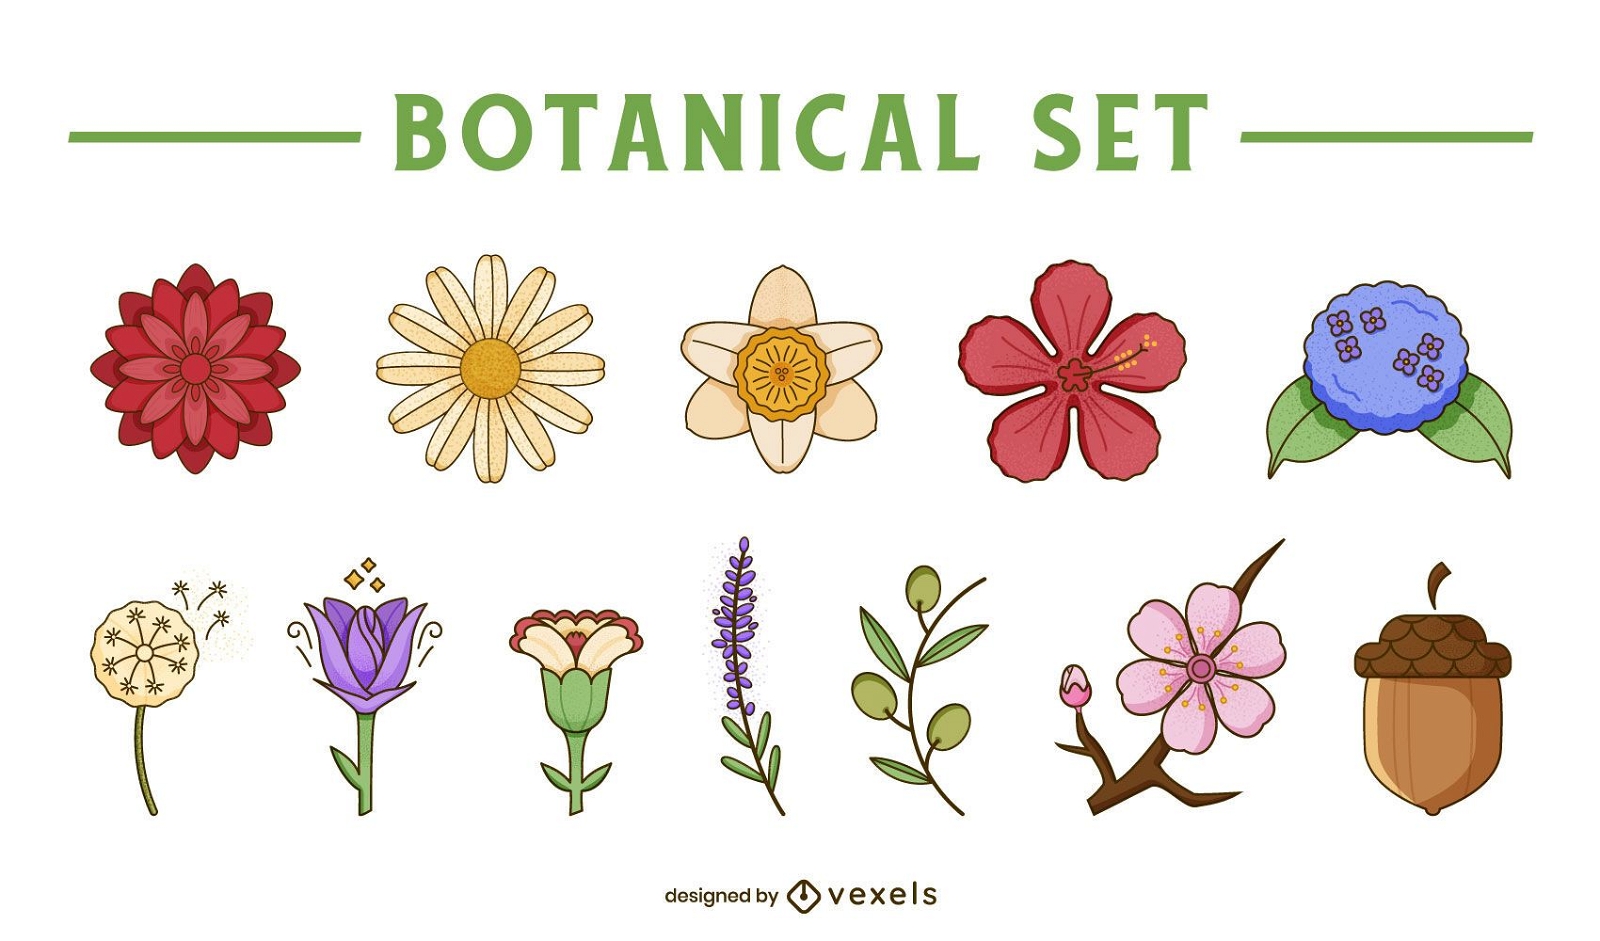 Botanical set